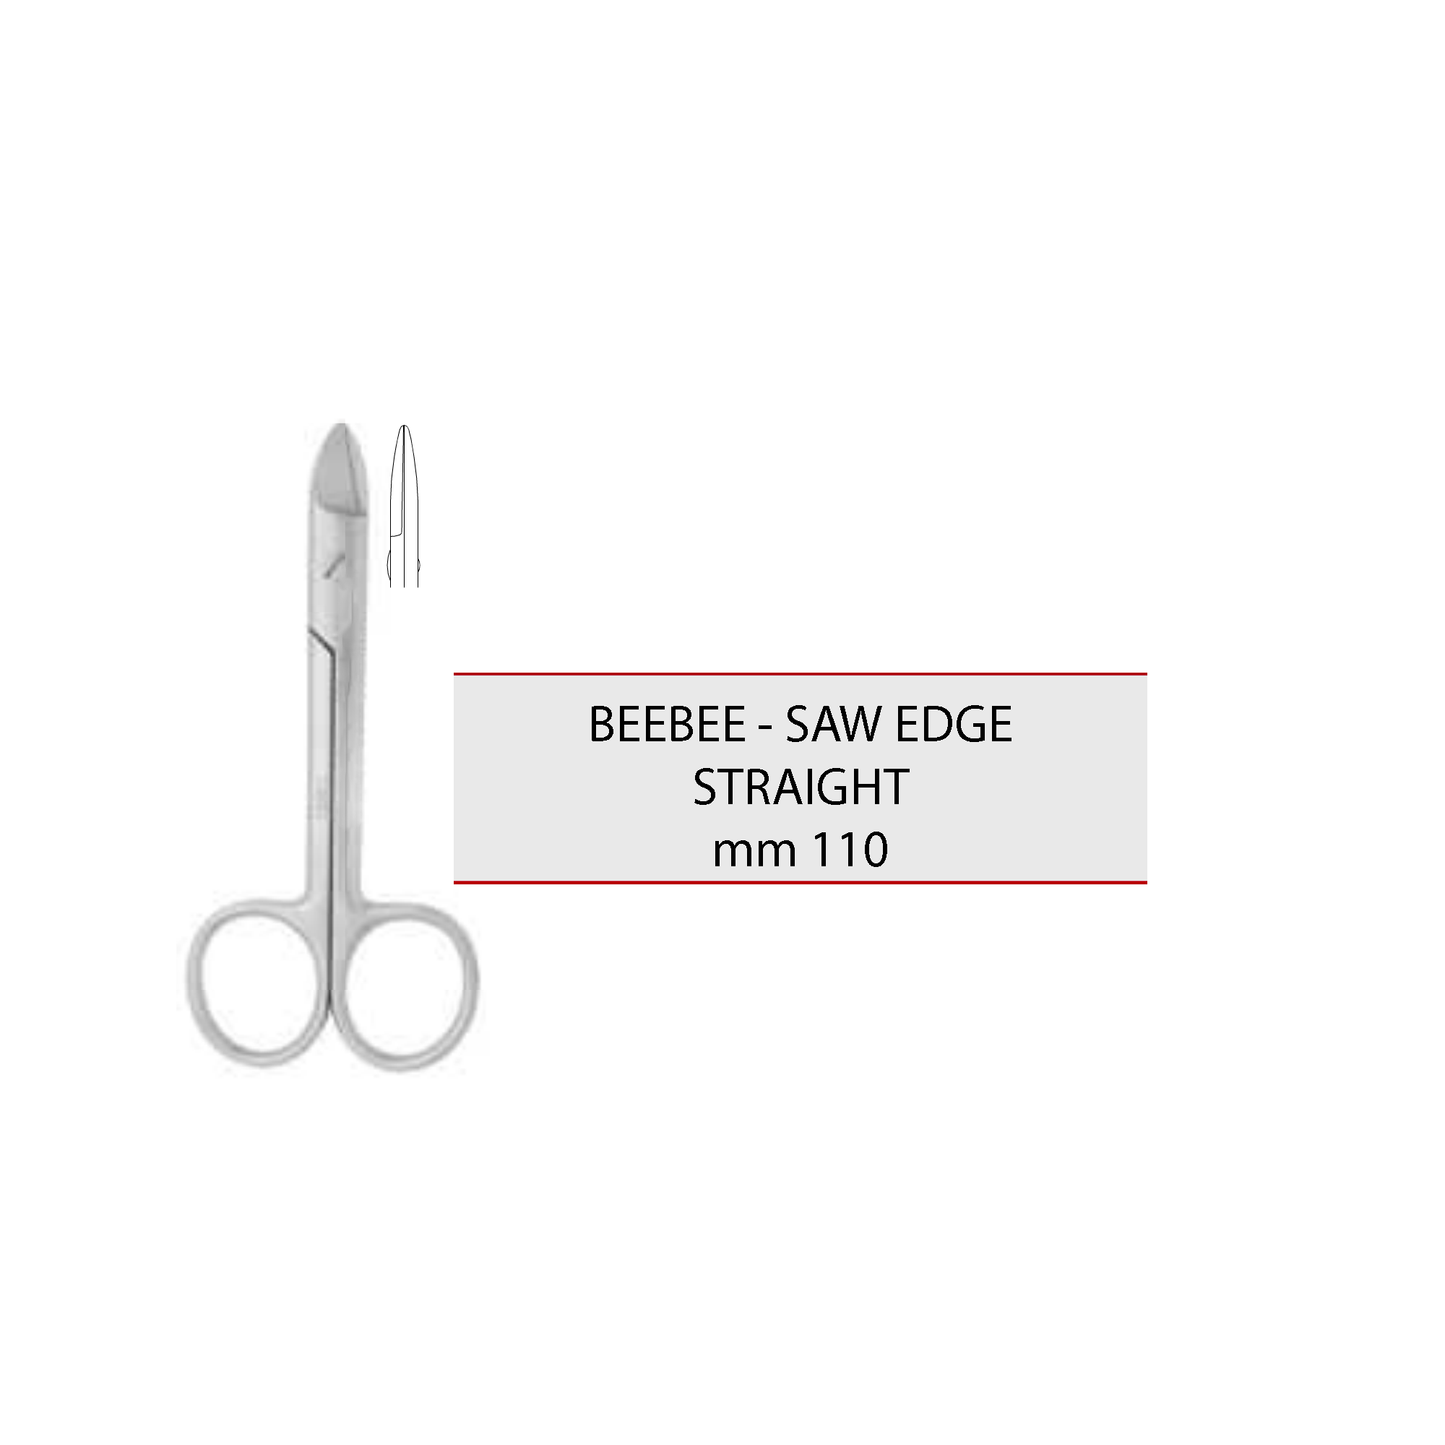 BEEBEE – SAW EDGE STRAIGHT mm 110 cod 1025-7